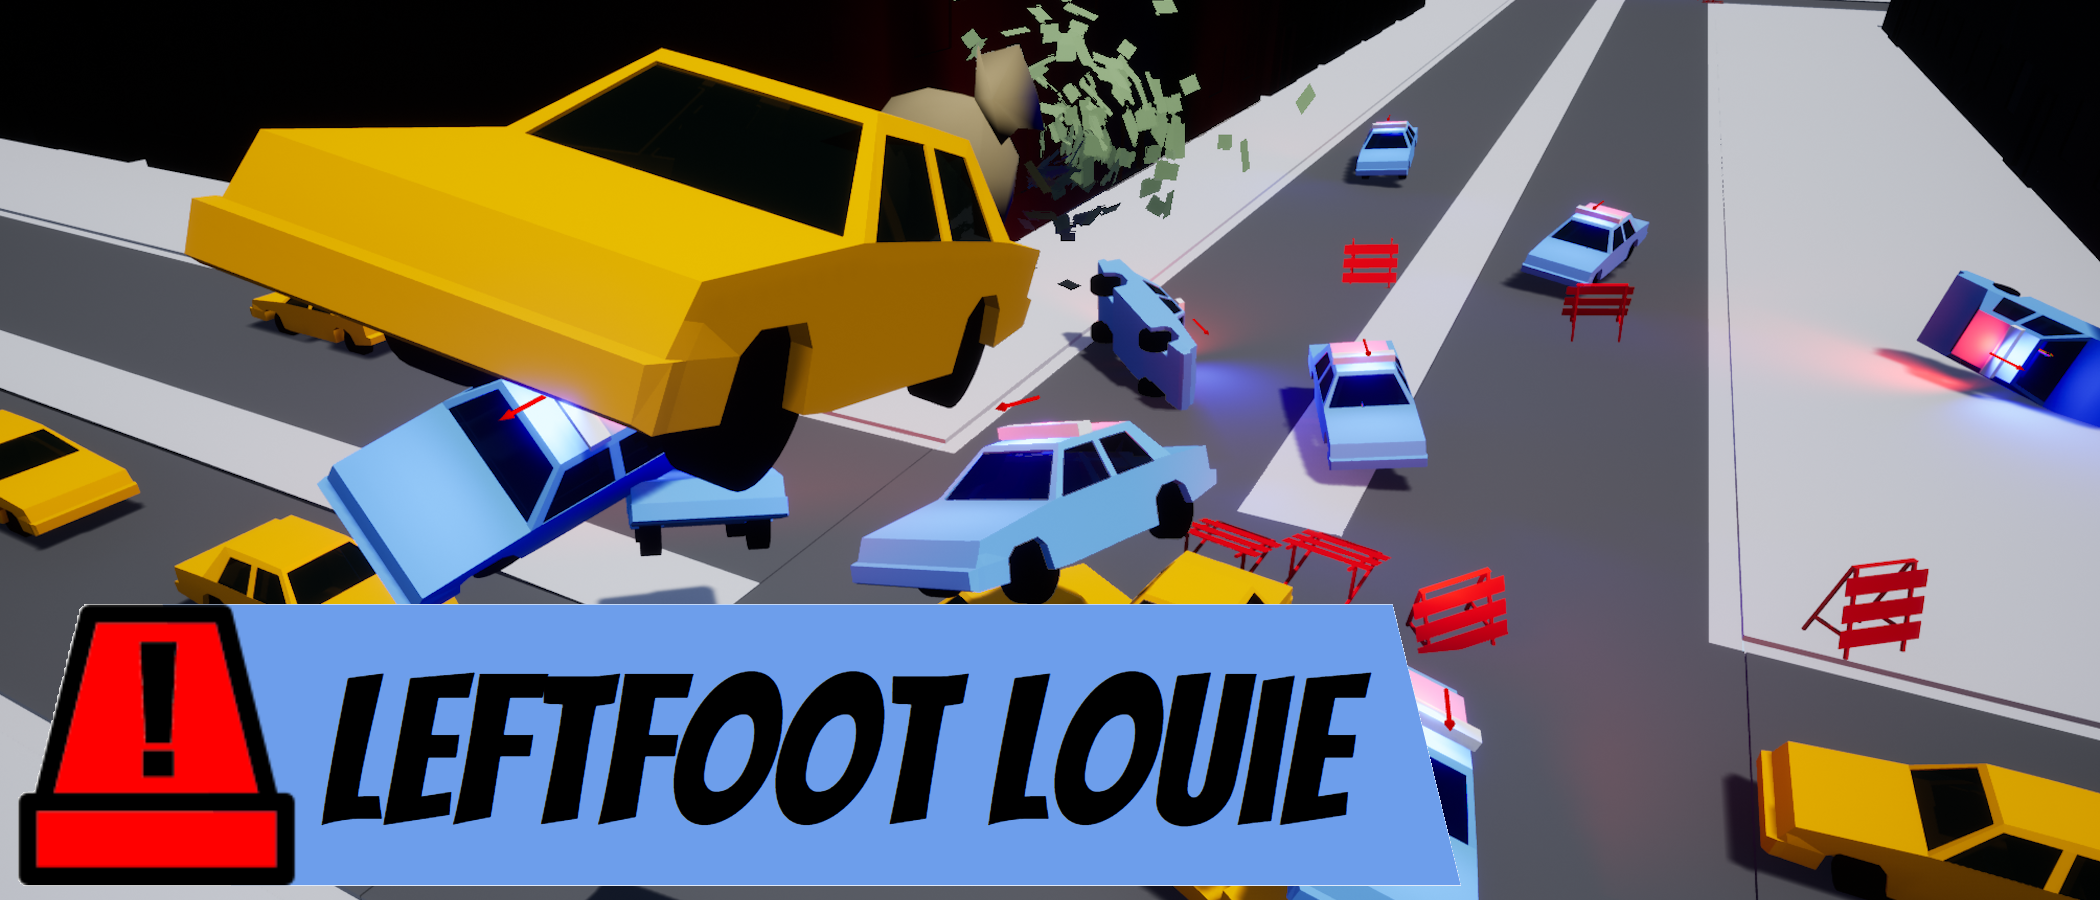 Leftfoot Louie